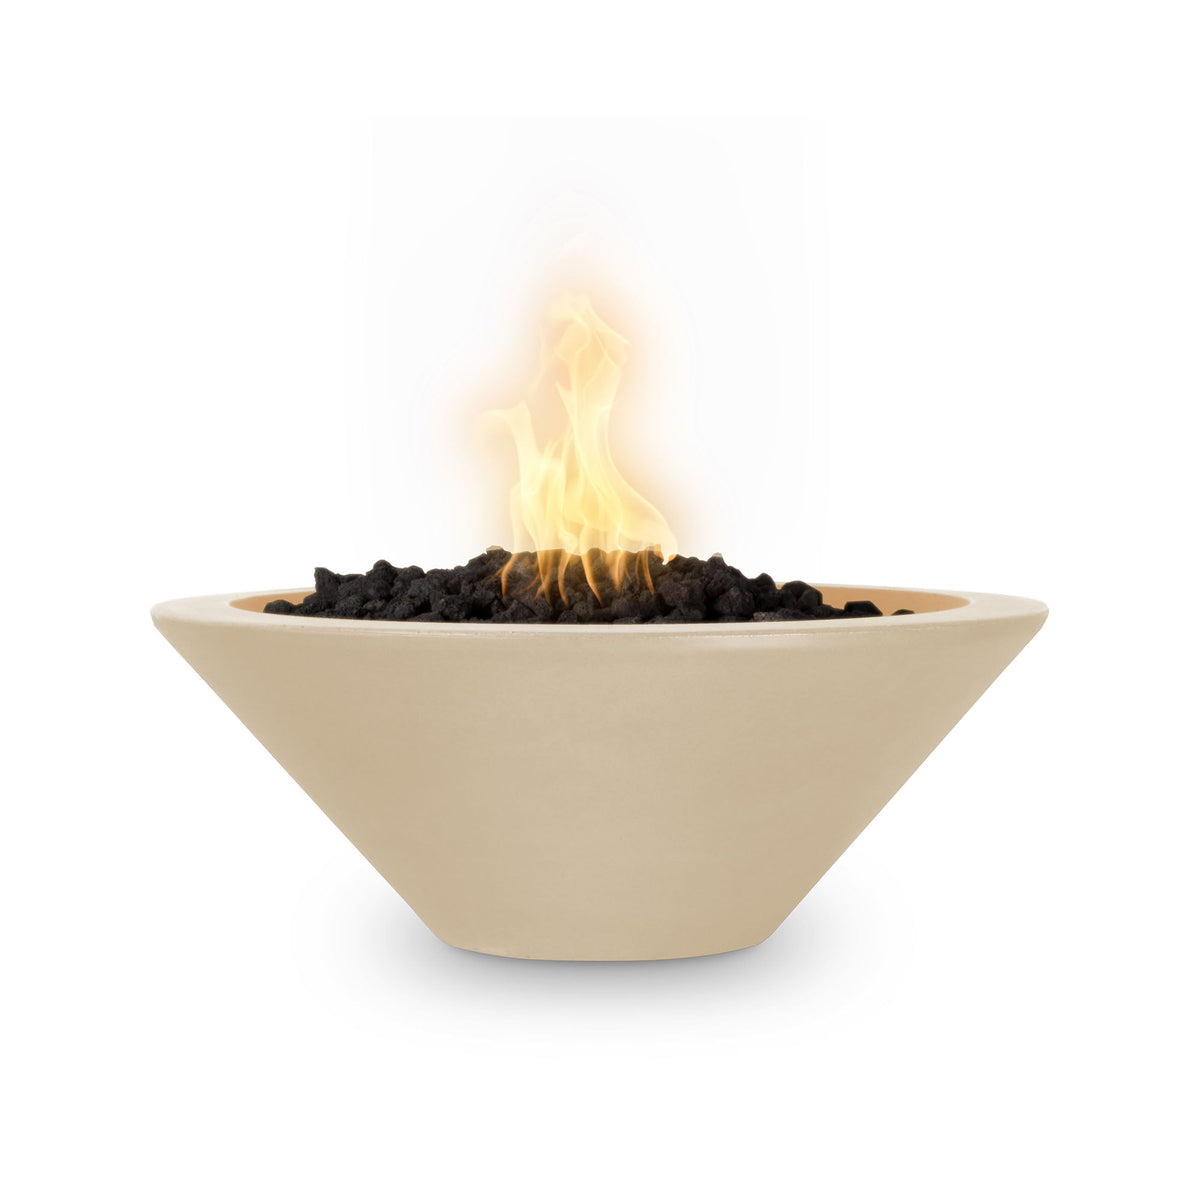 The Outdoor Plus 24&quot; Cazo GFRC Concrete Round Fire Bowl in Vanilla